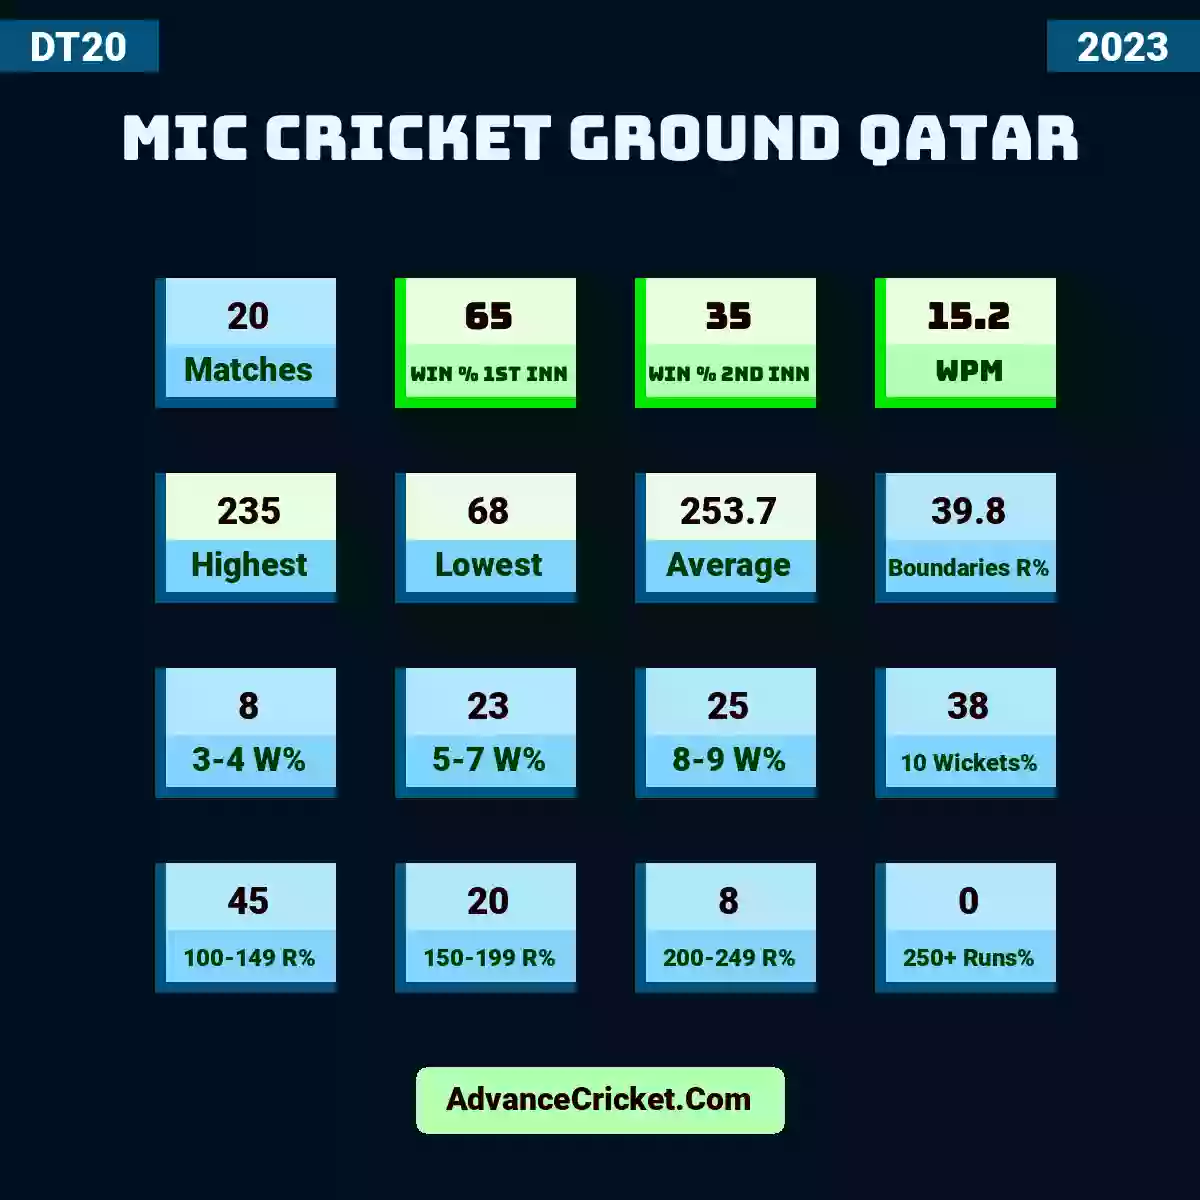 Image showing MIC Cricket Ground Qatar with Matches: 20, Win % 1st Inn: 65, Win % 2nd Inn: 35, WPM: 15.2, Highest: 235, Lowest: 68, Average: 253.7, Boundaries R%: 39.8, 3-4 W%: 8, 5-7 W%: 23, 8-9 W%: 25, 10 Wickets%: 38, 100-149 R%: 45, 150-199 R%: 20, 200-249 R%: 8, 250+ Runs%: 0.